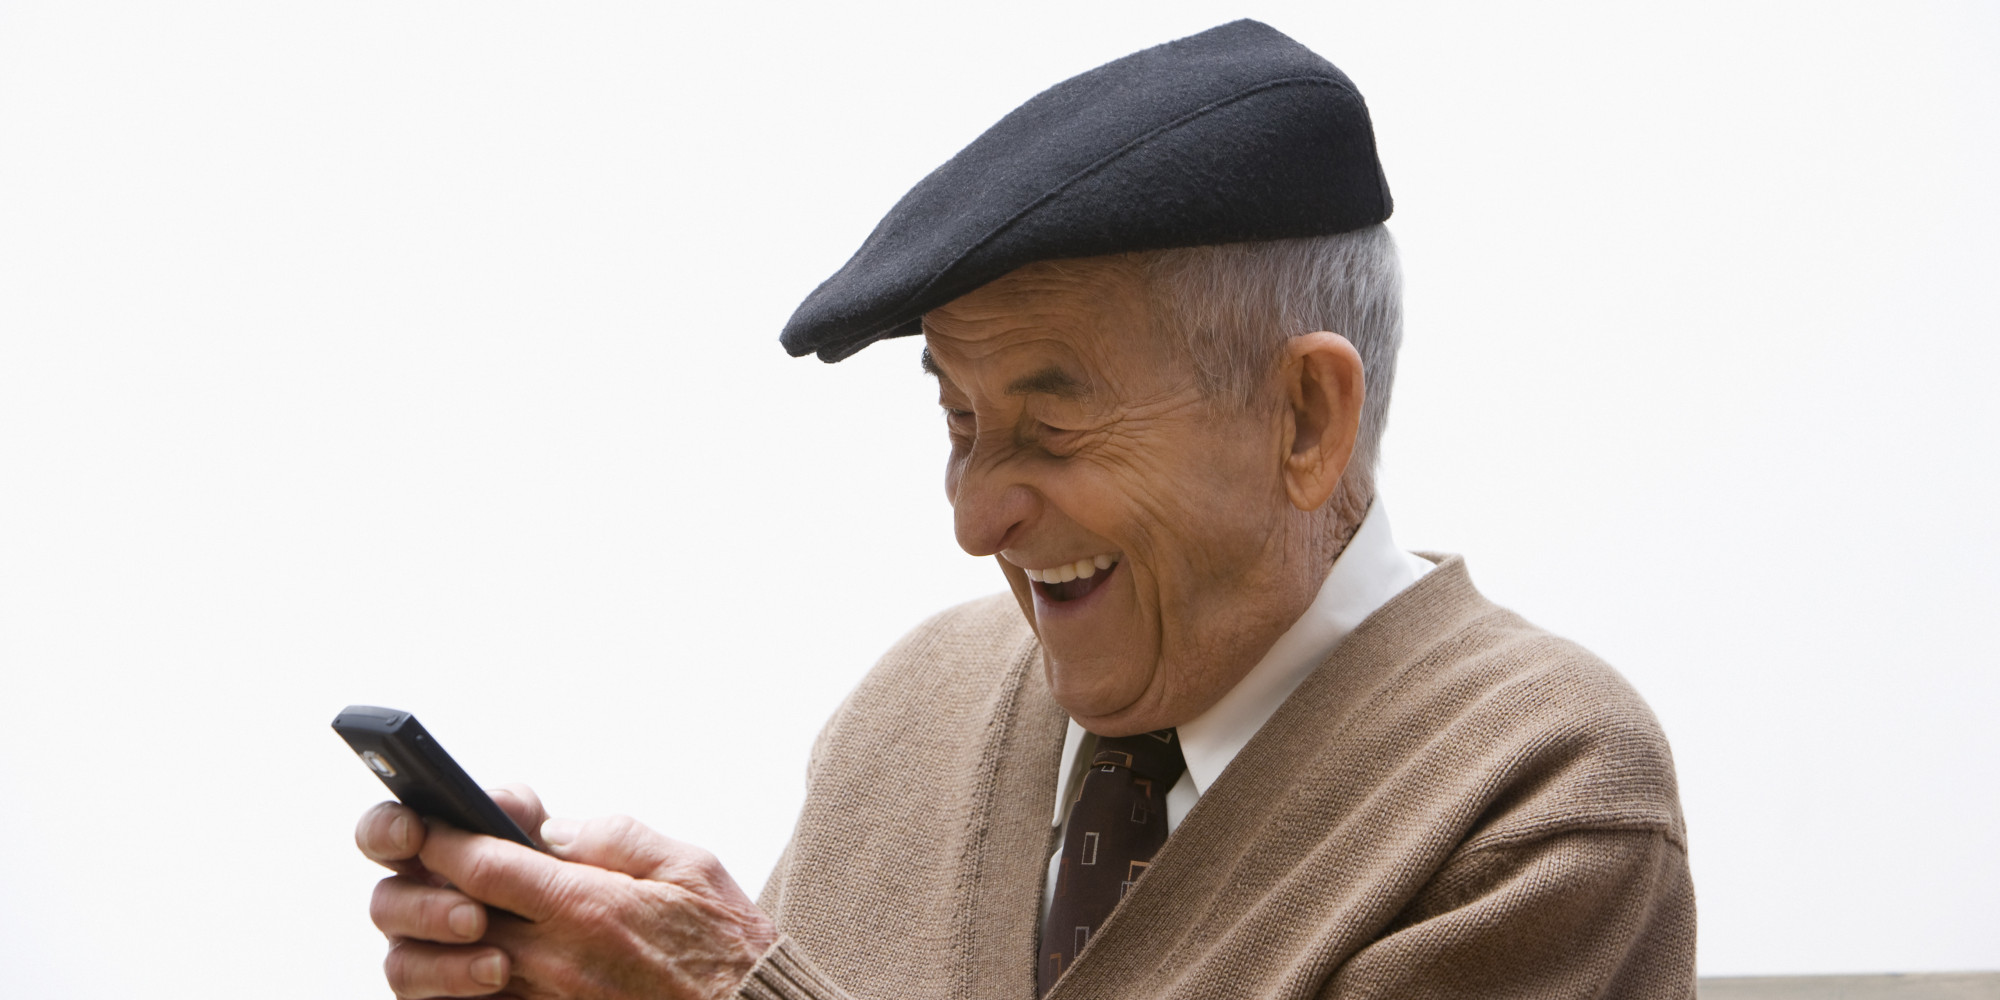 Best smartphones for seniors